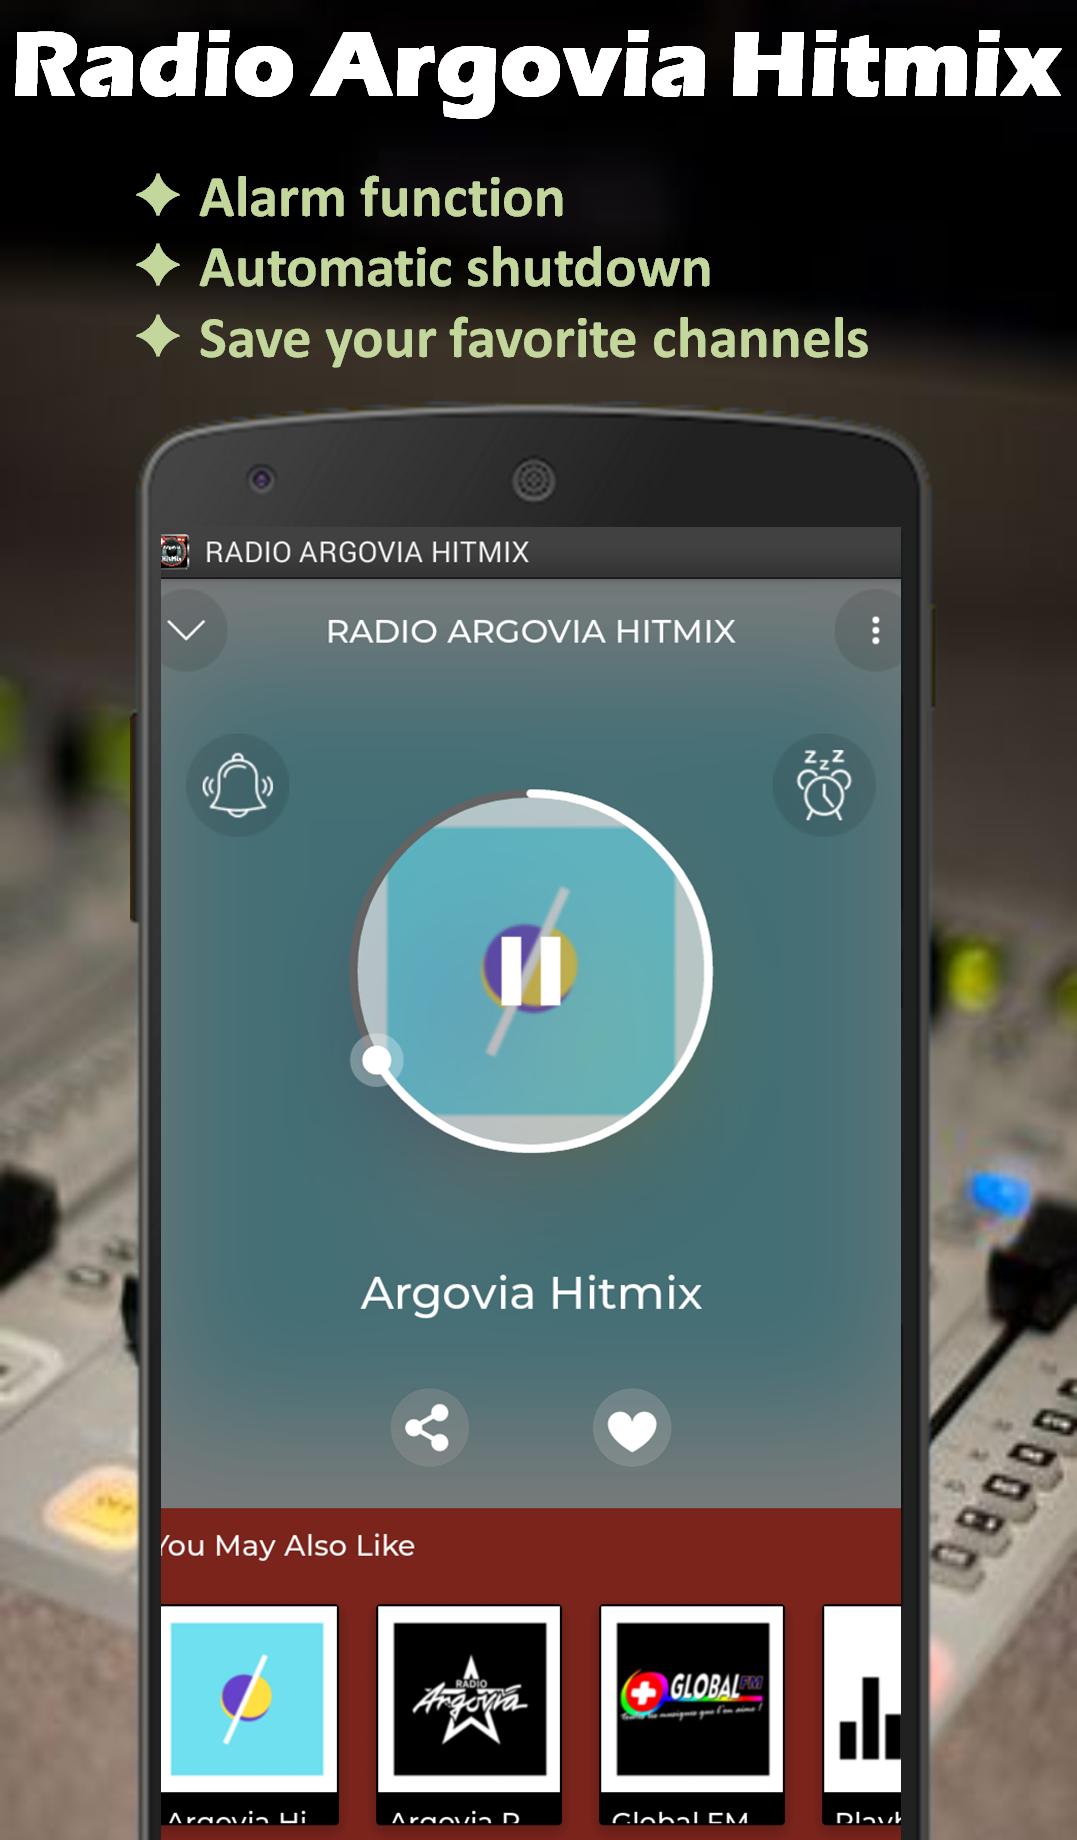 Radio Argovia Hitmix Live for Android - APK Download